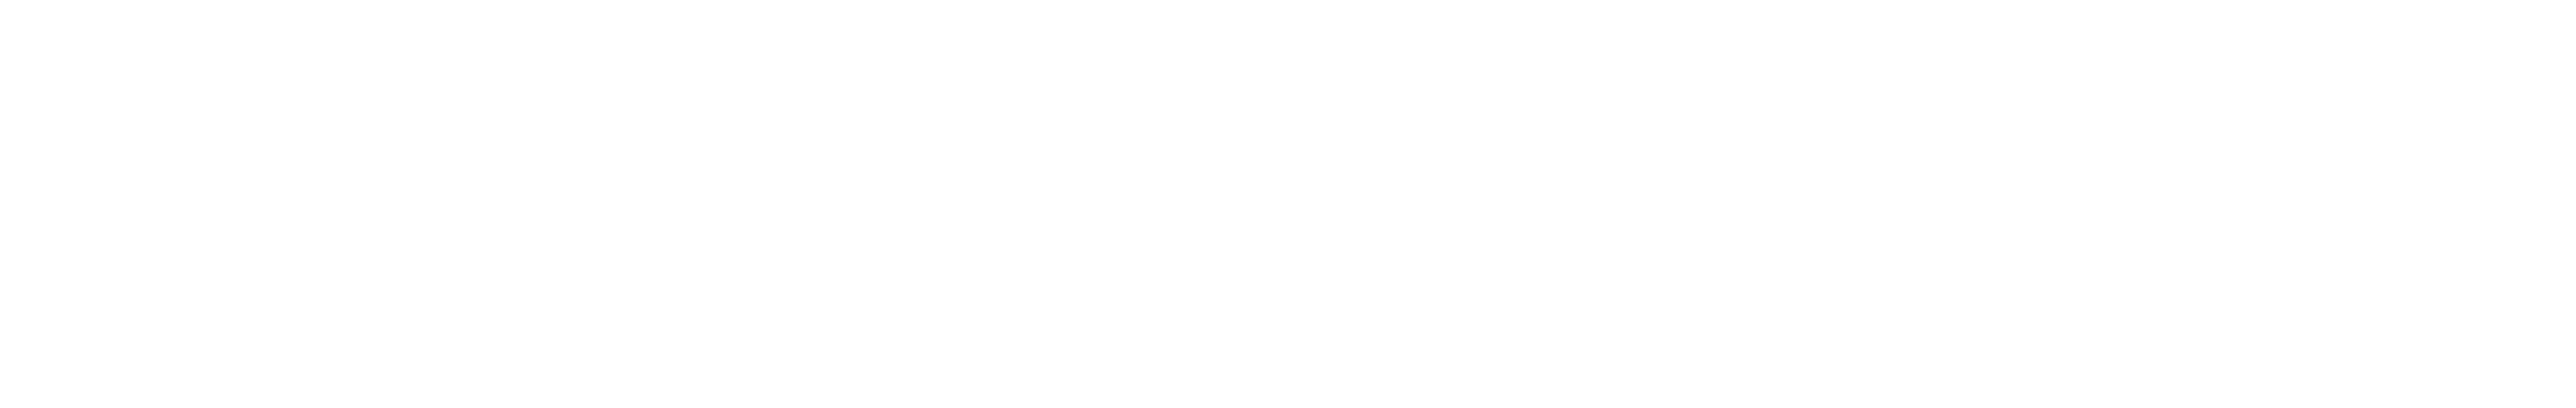 Tech Pro Services Logo